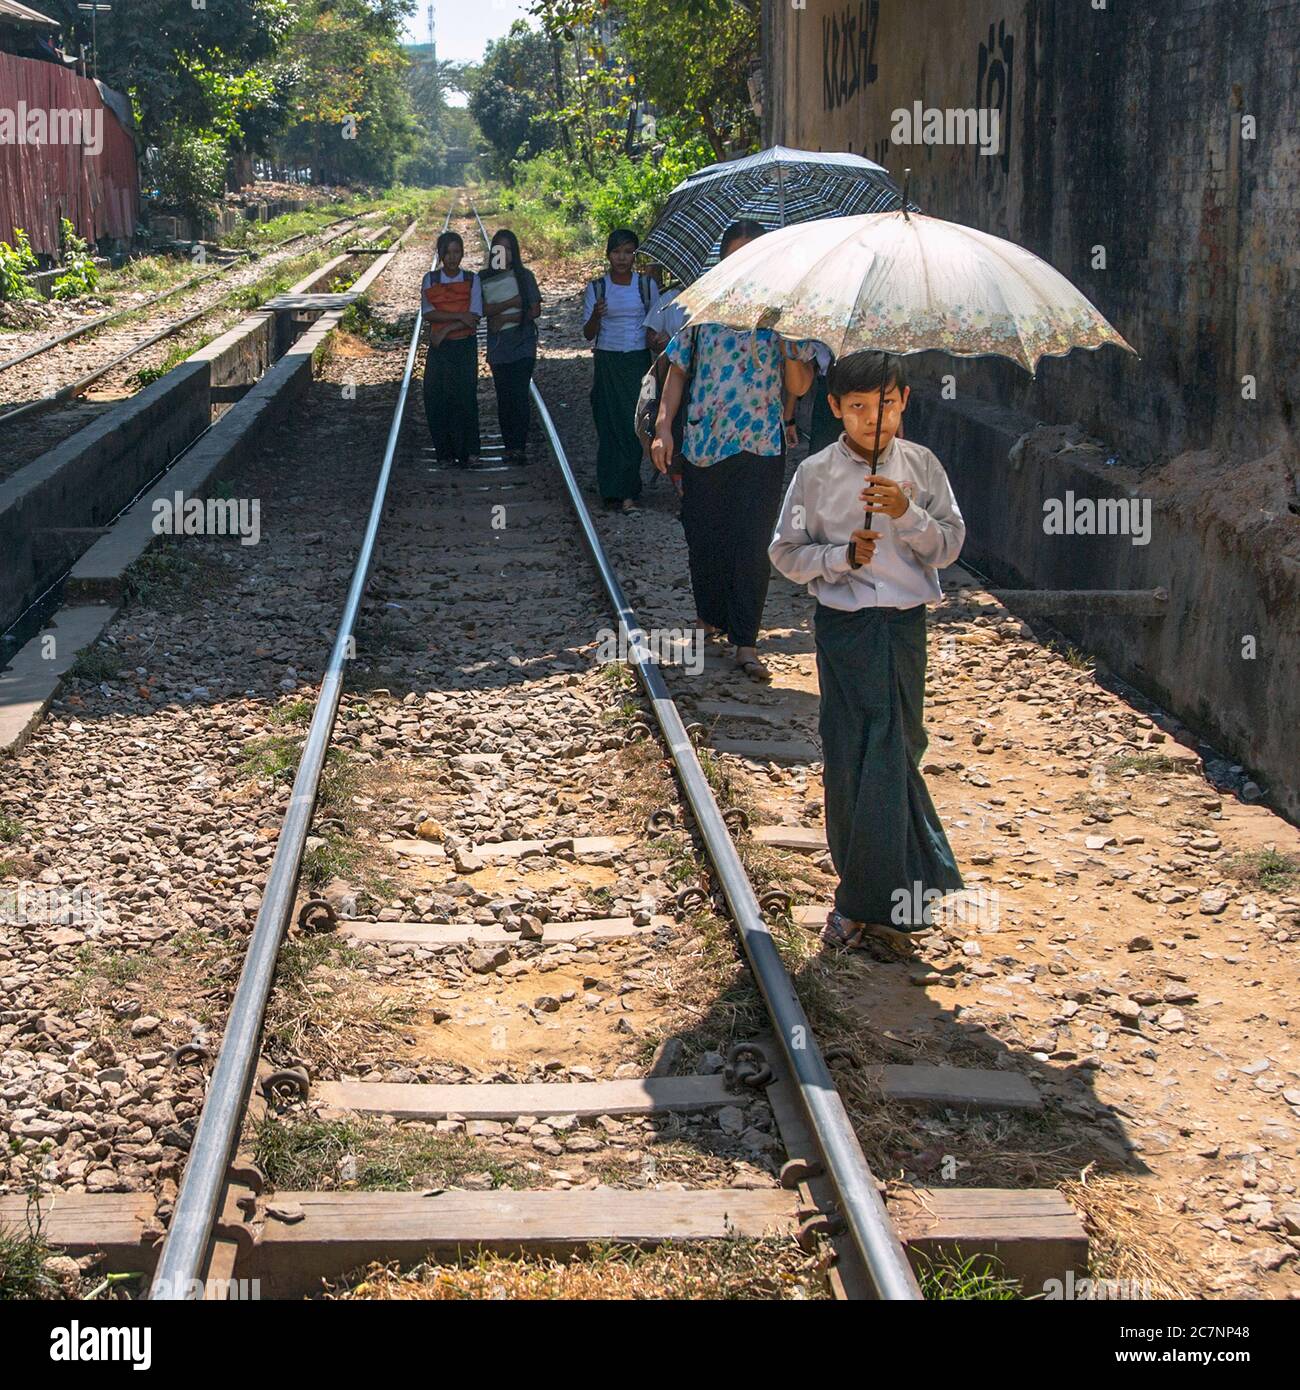 A young boy holds an umbrella as he walks along the Yangon Circular Railroad track in Yangon, Myanmar Stock Photo